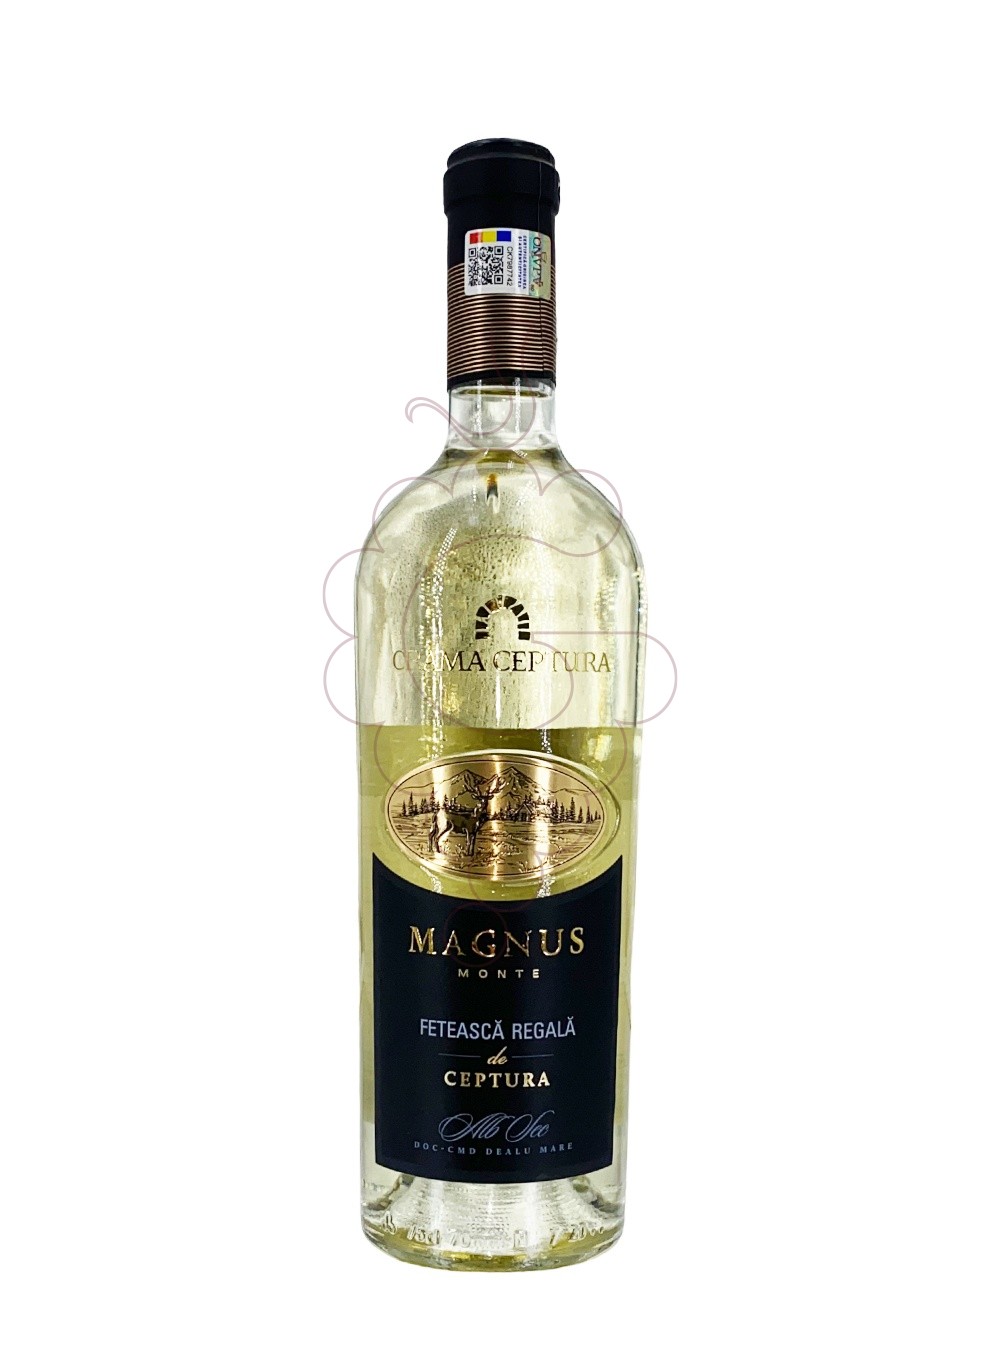 Foto Crama Ceptura Cervus Magnus Monte Feteasca Regala vino blanco